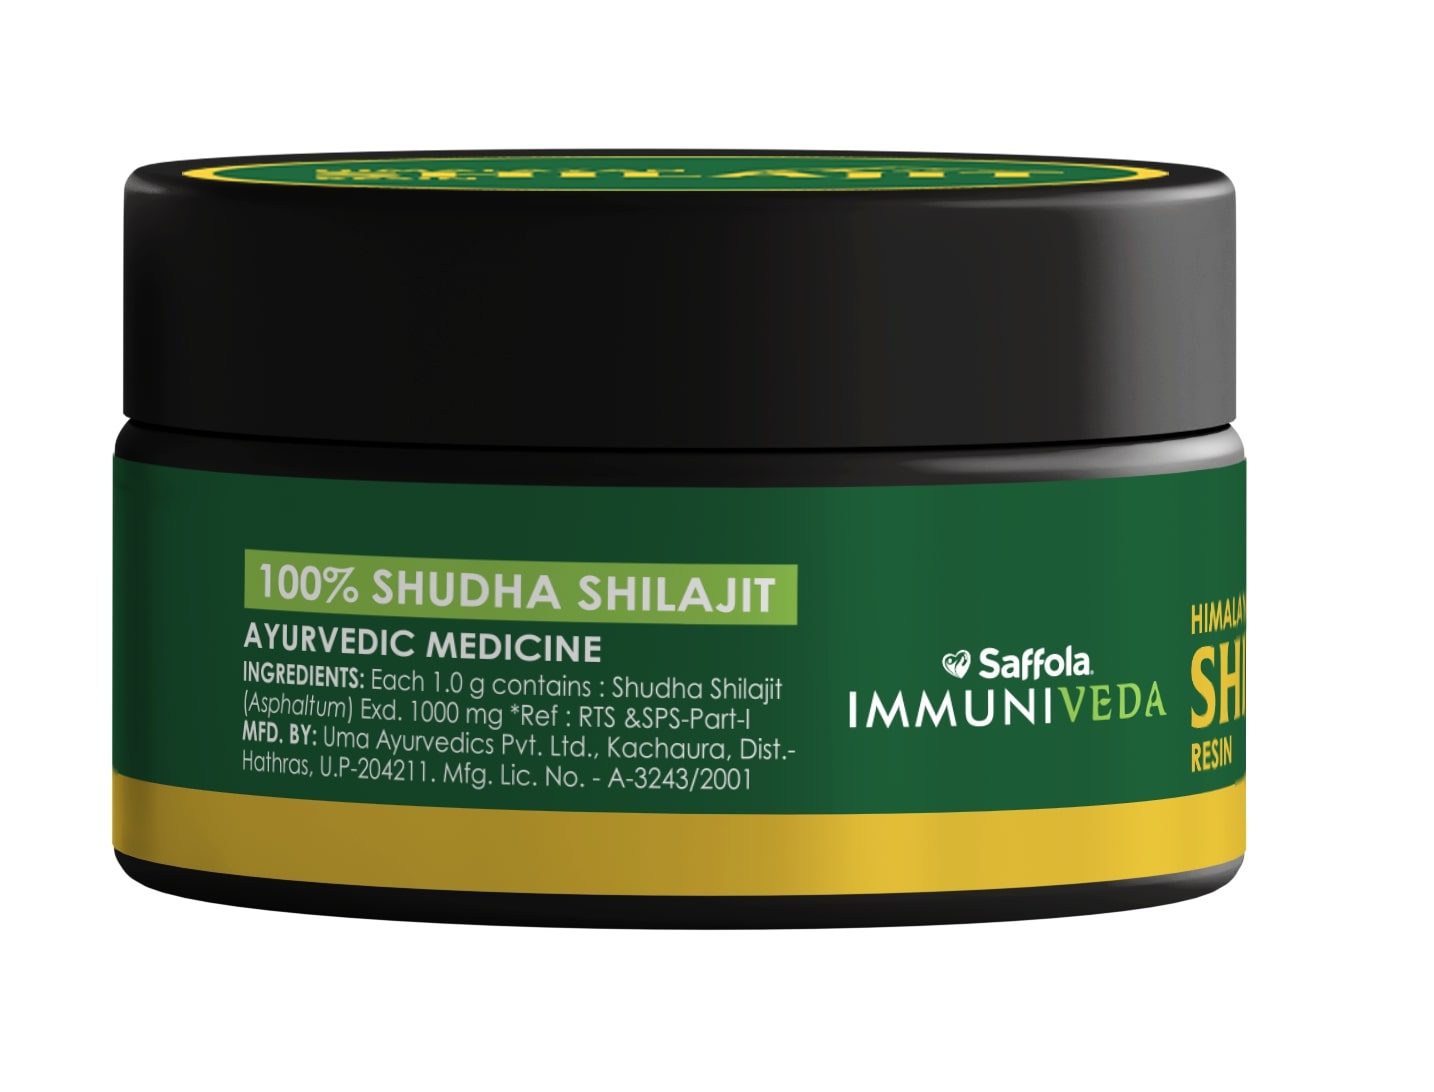 [CRED] Saffola Immuniveda Pure Himalayan Shilajit Resin – 30 g